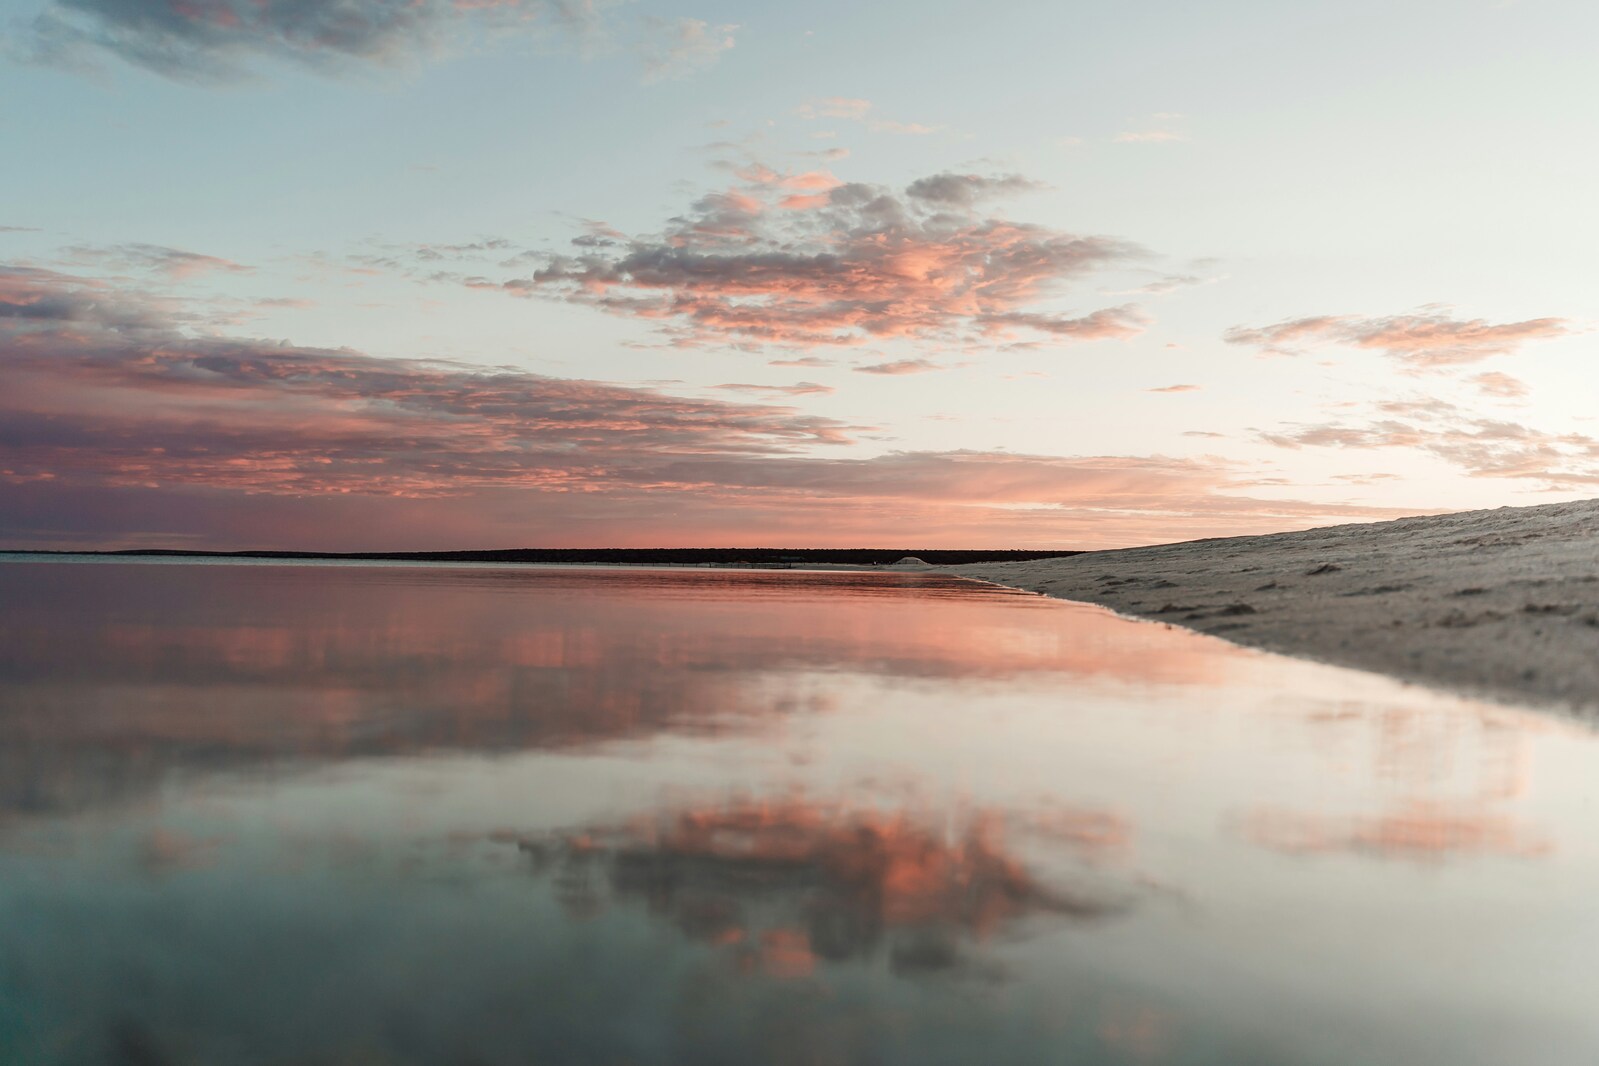 Image of Shell Beach, WA by Team PhotoHound